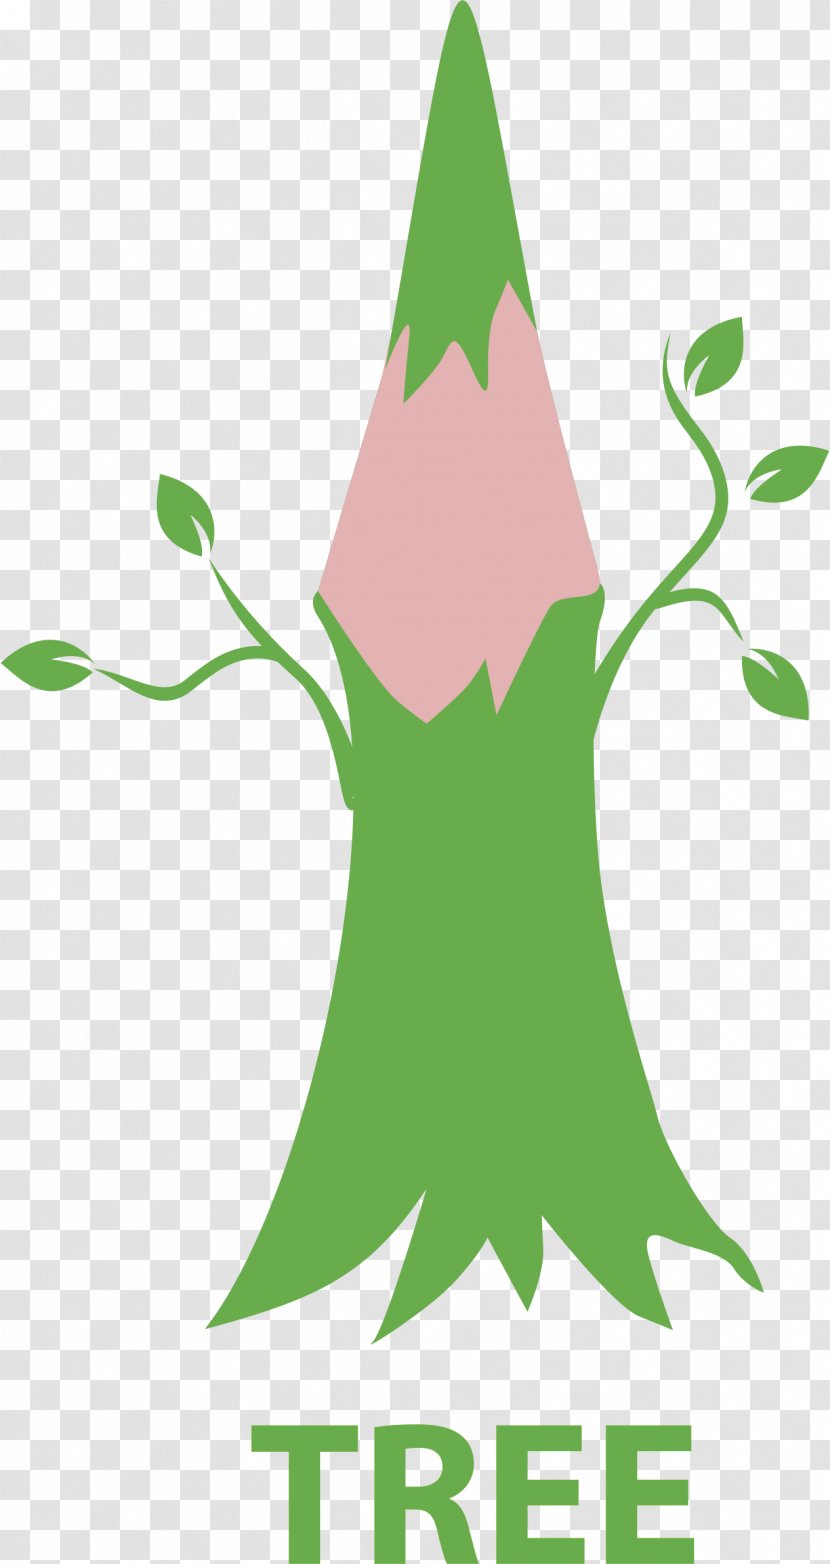 Royalty-free Logo Illustration - Green - Pencil Tree Transparent PNG